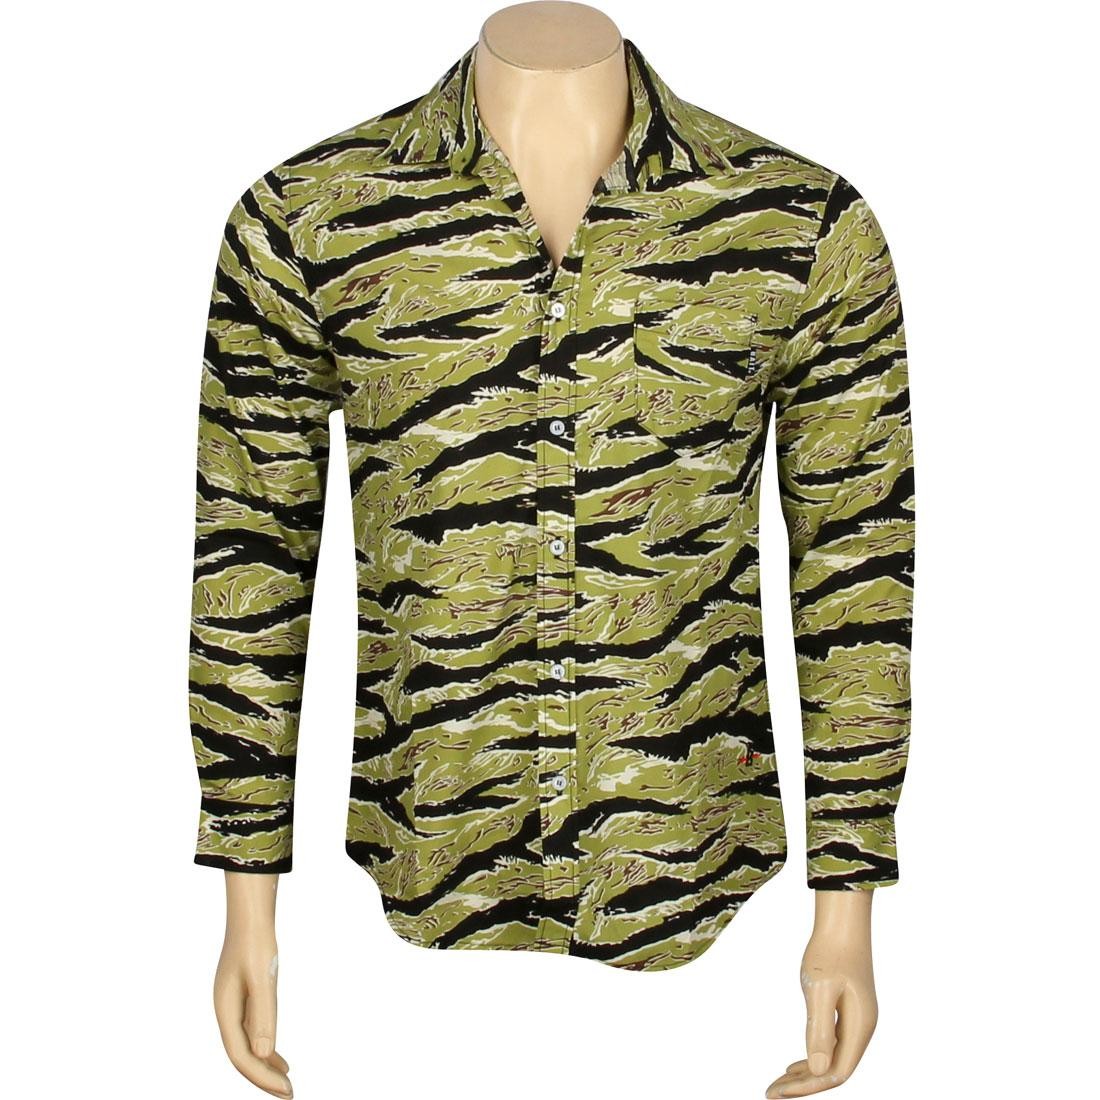 BAIT Basics Long Sleeve Shirt (camo / tiger camo)